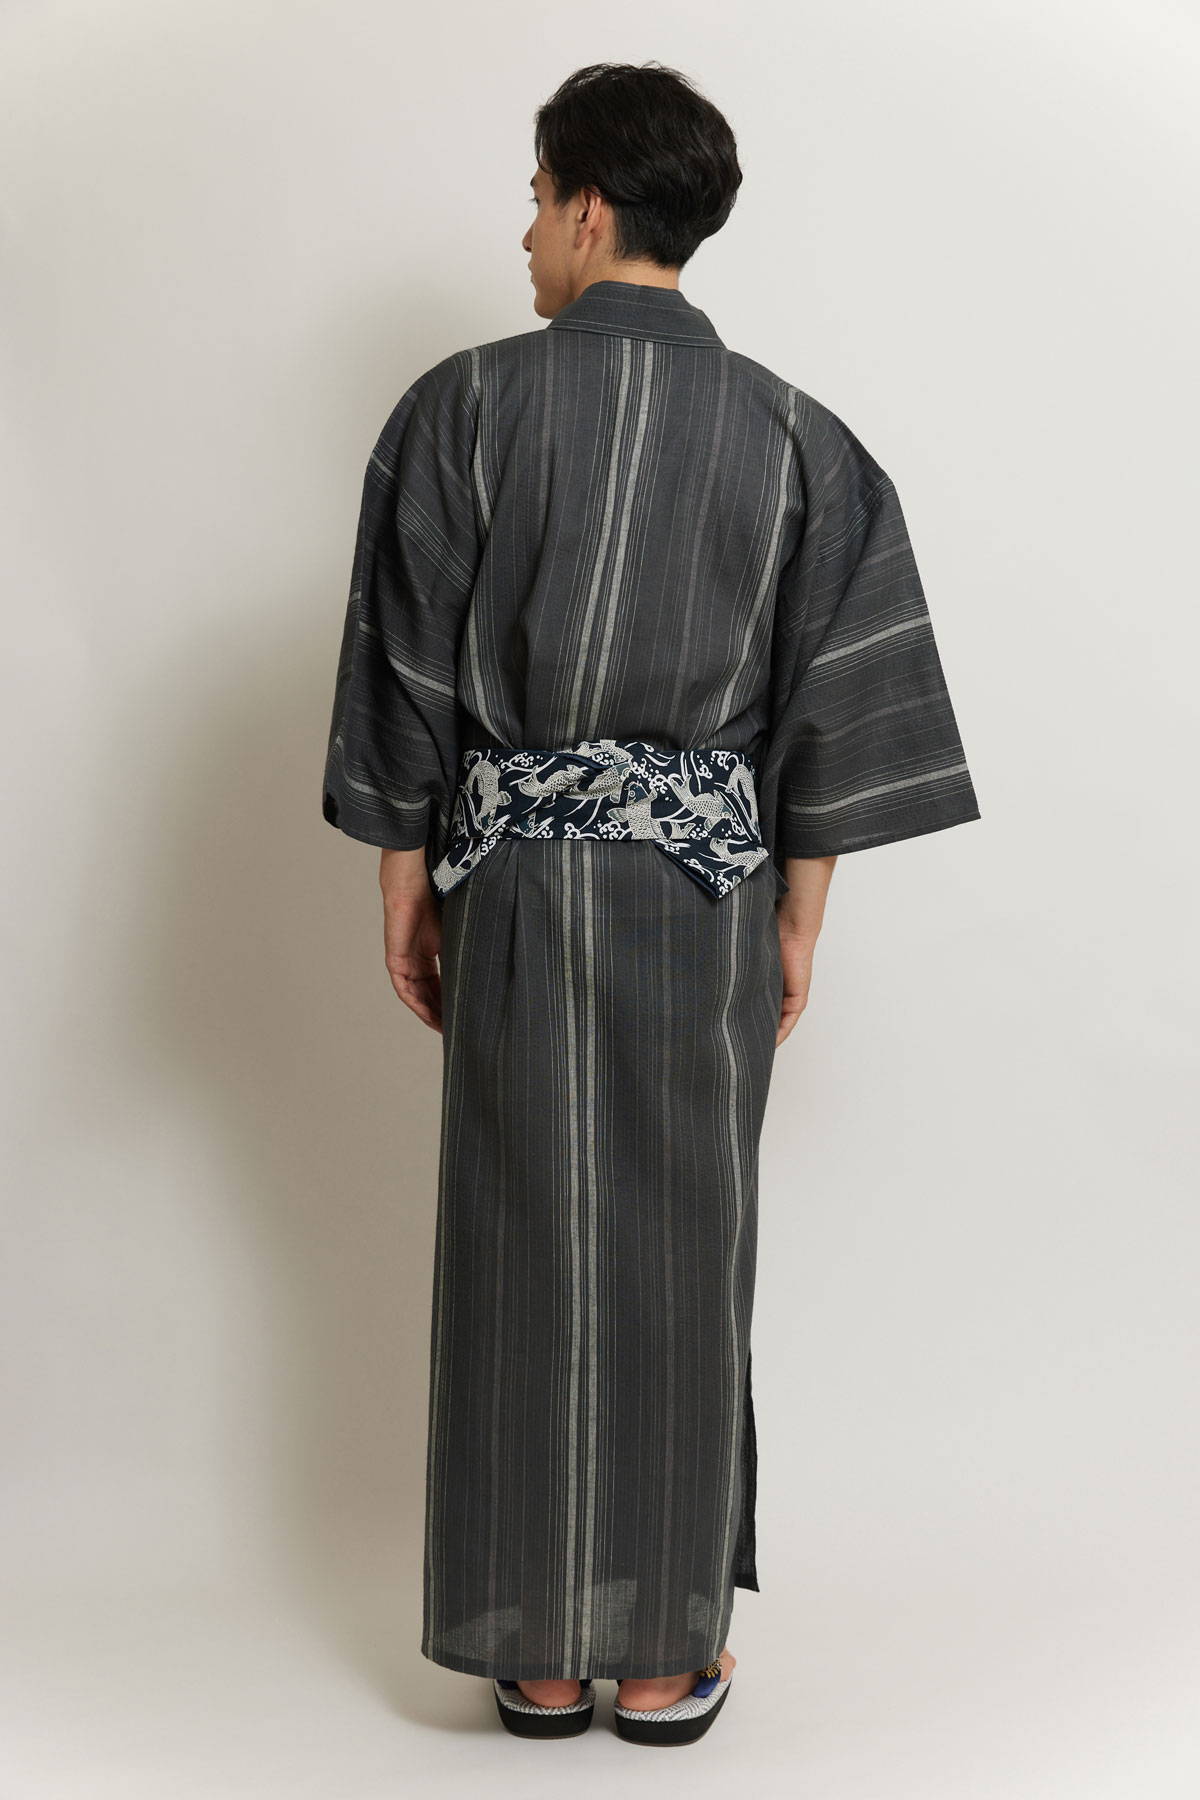 Japan Fencing Kendo Cotton Indigo Uniform Kendogi Clothes Robe Samurai Garment 